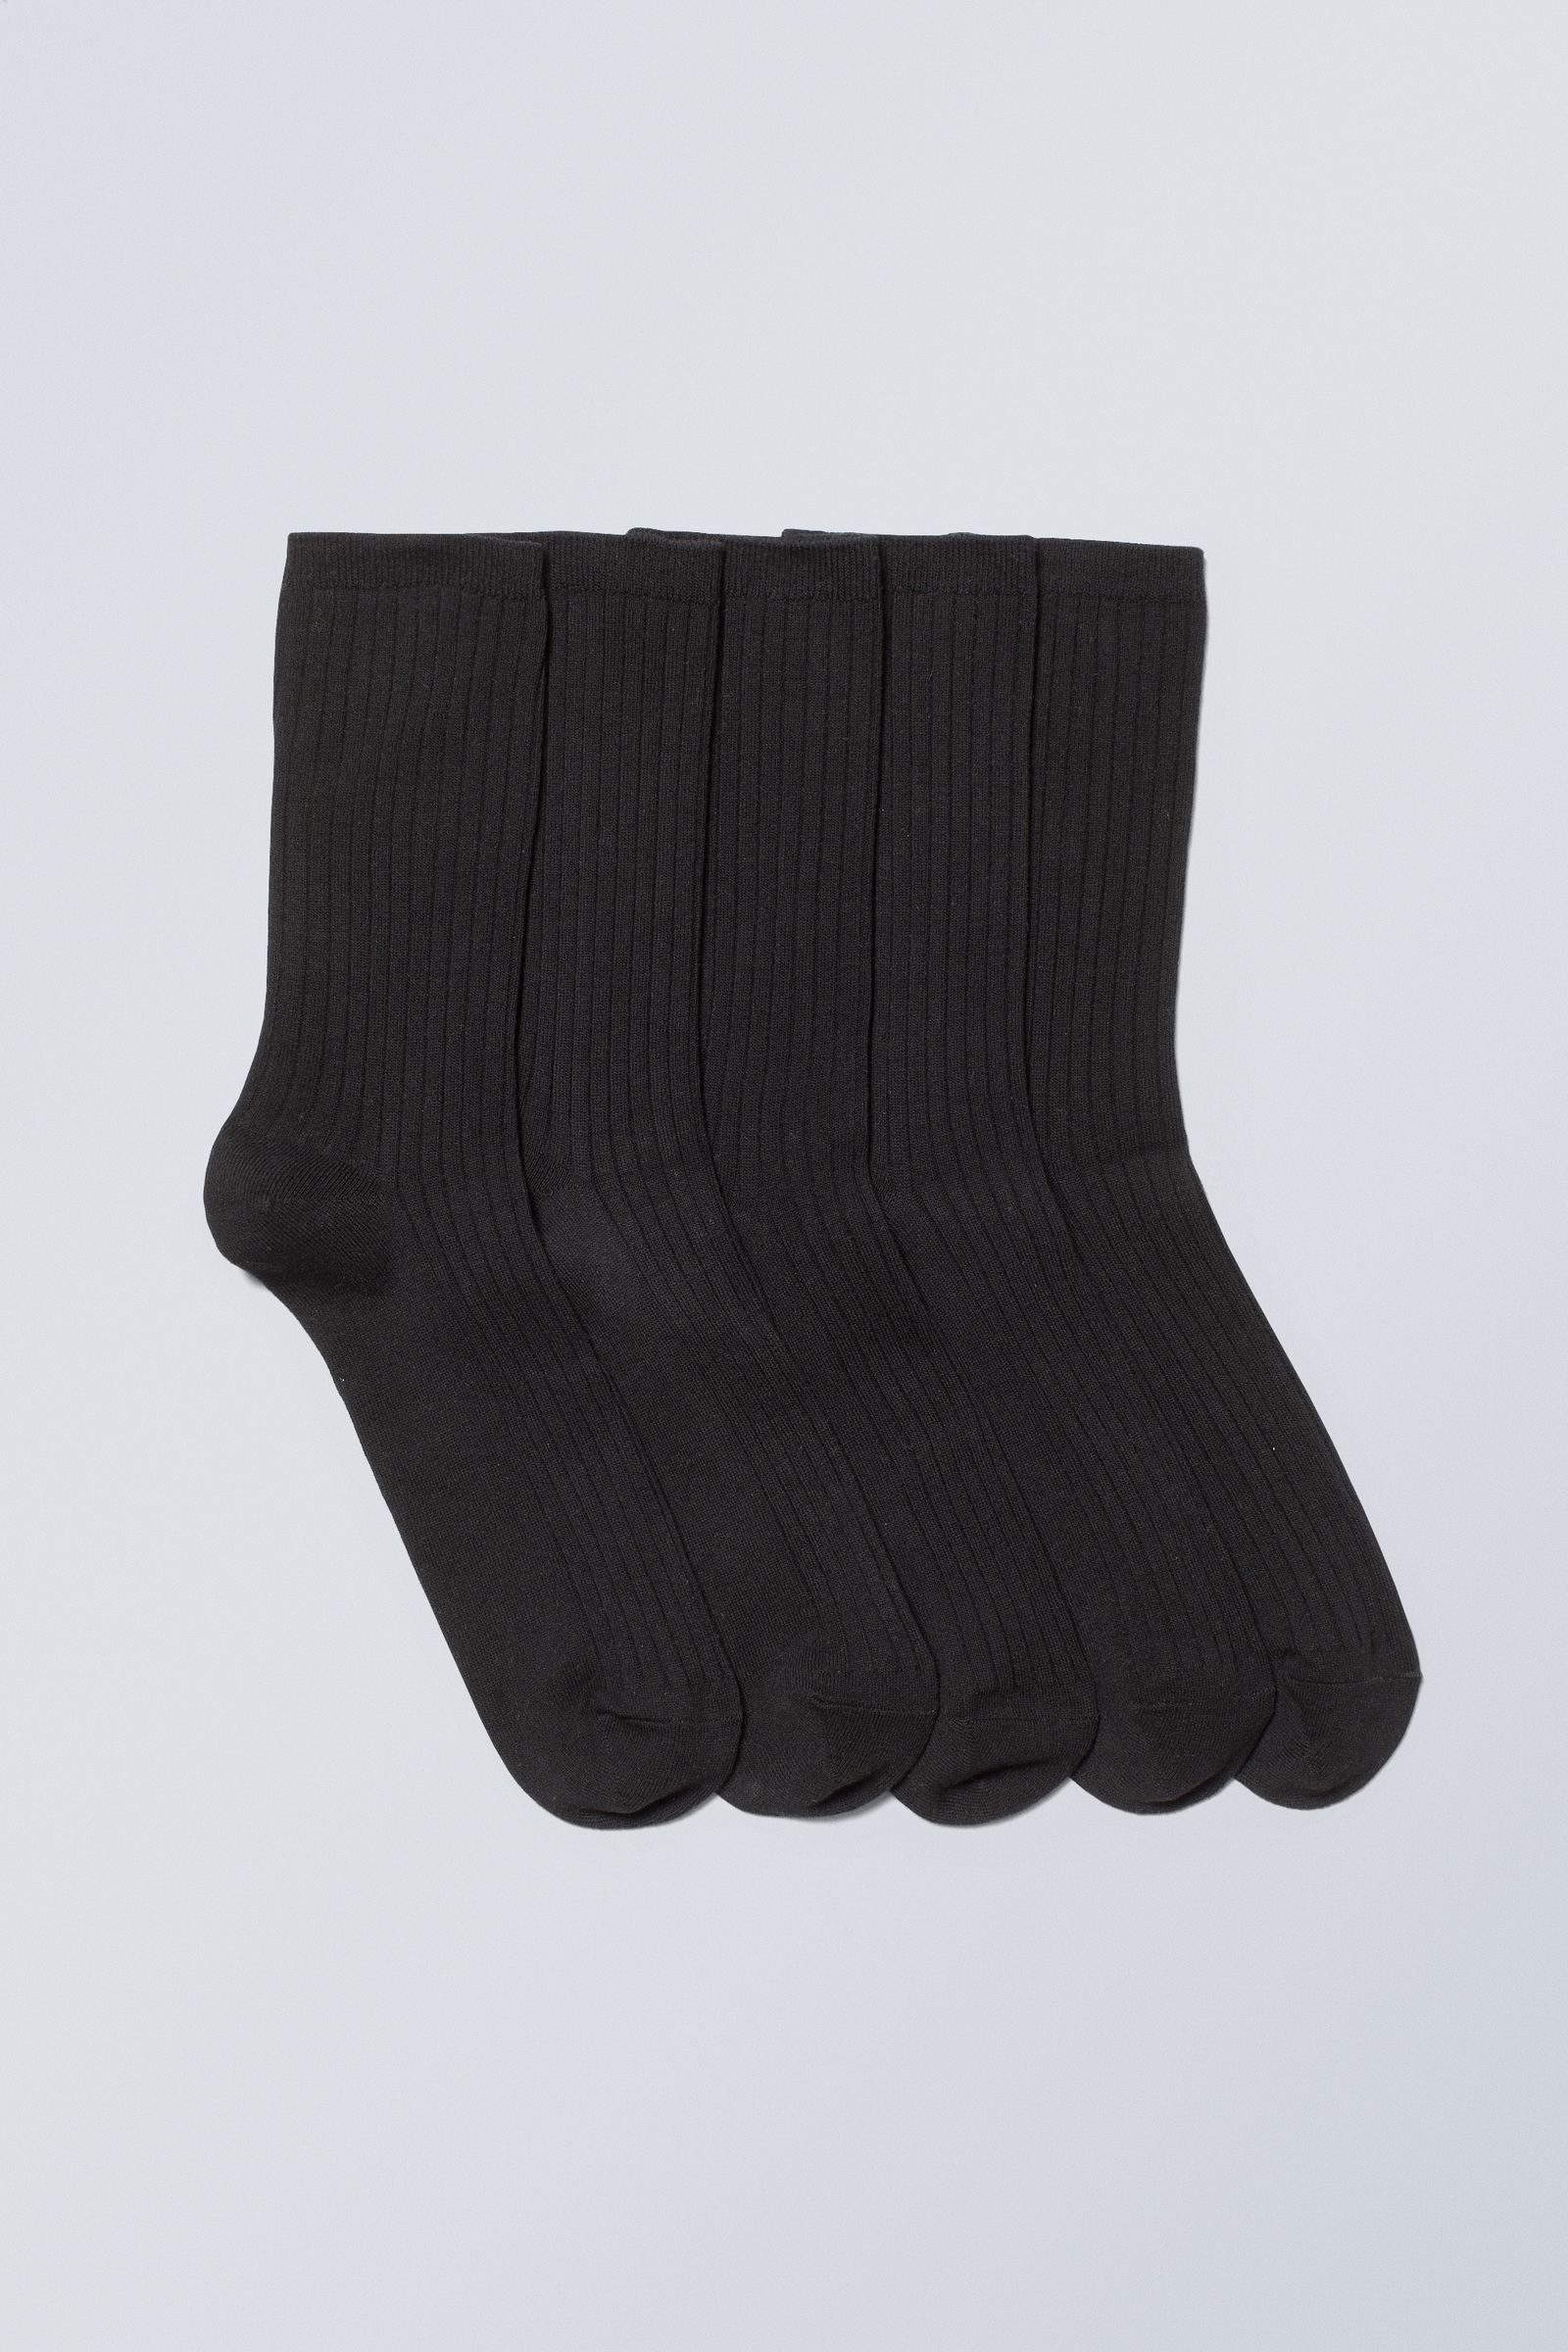 #272628 - 5pack Rib Socks